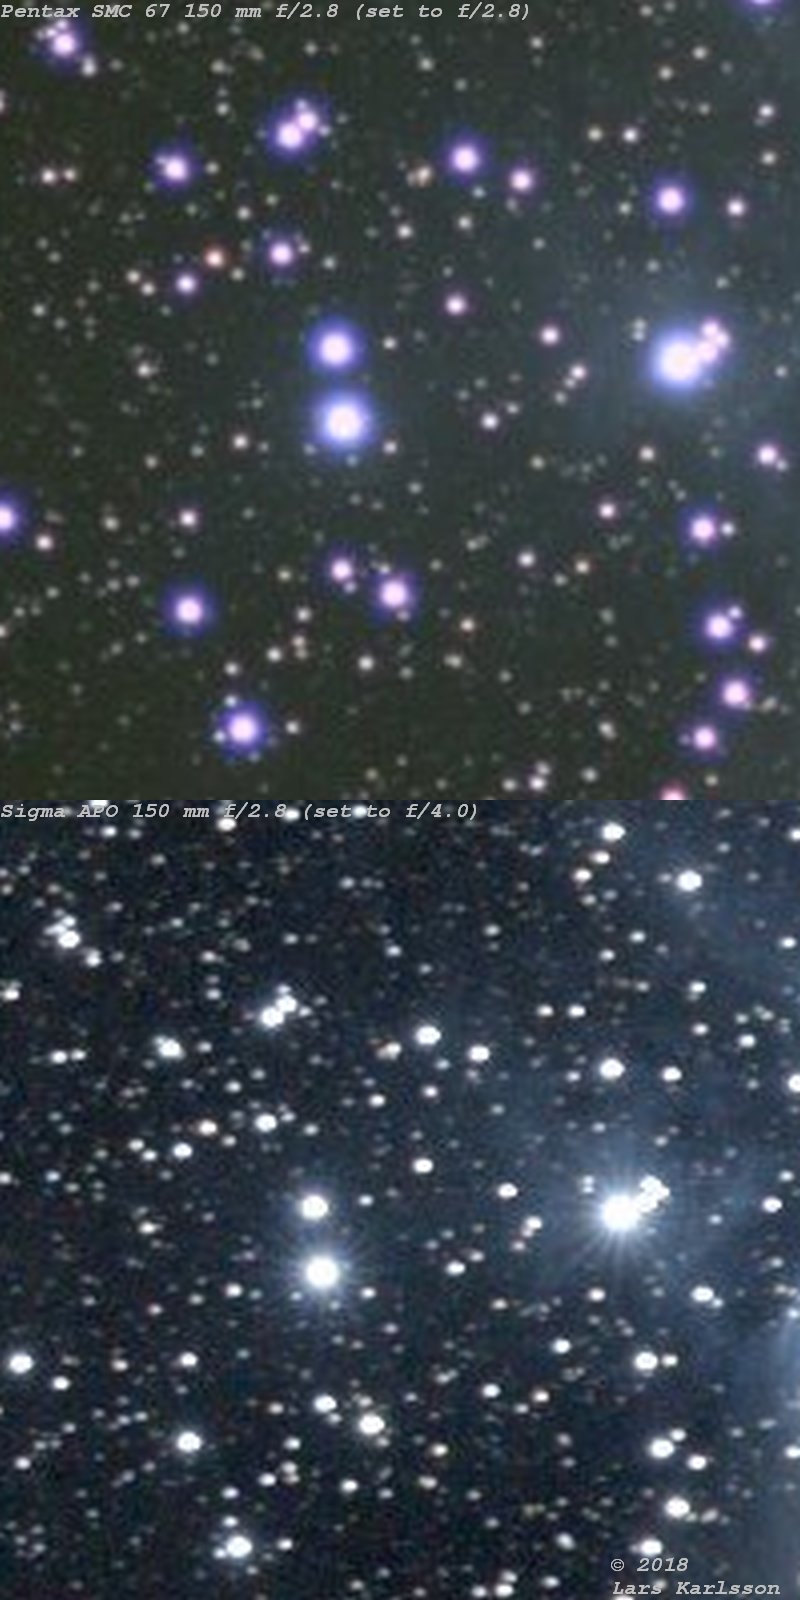 Pentax 67 165mm f/2.8 and Sigma APO 150mm f/2.8 tested at M45 nebula